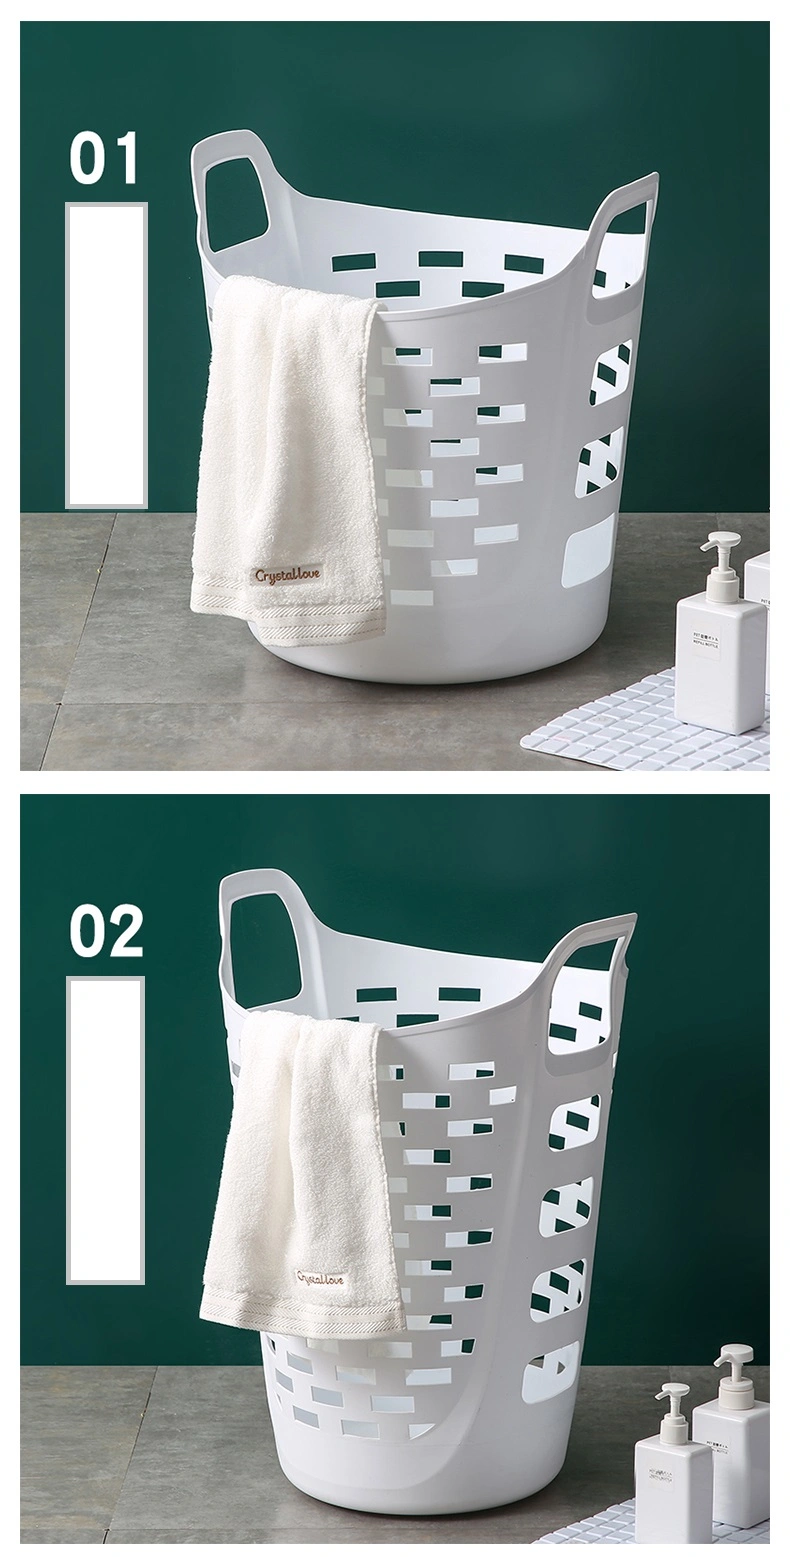 Foldable Laundry Basket Home Use Dirty Clothes Storage Basket Foldable Basket